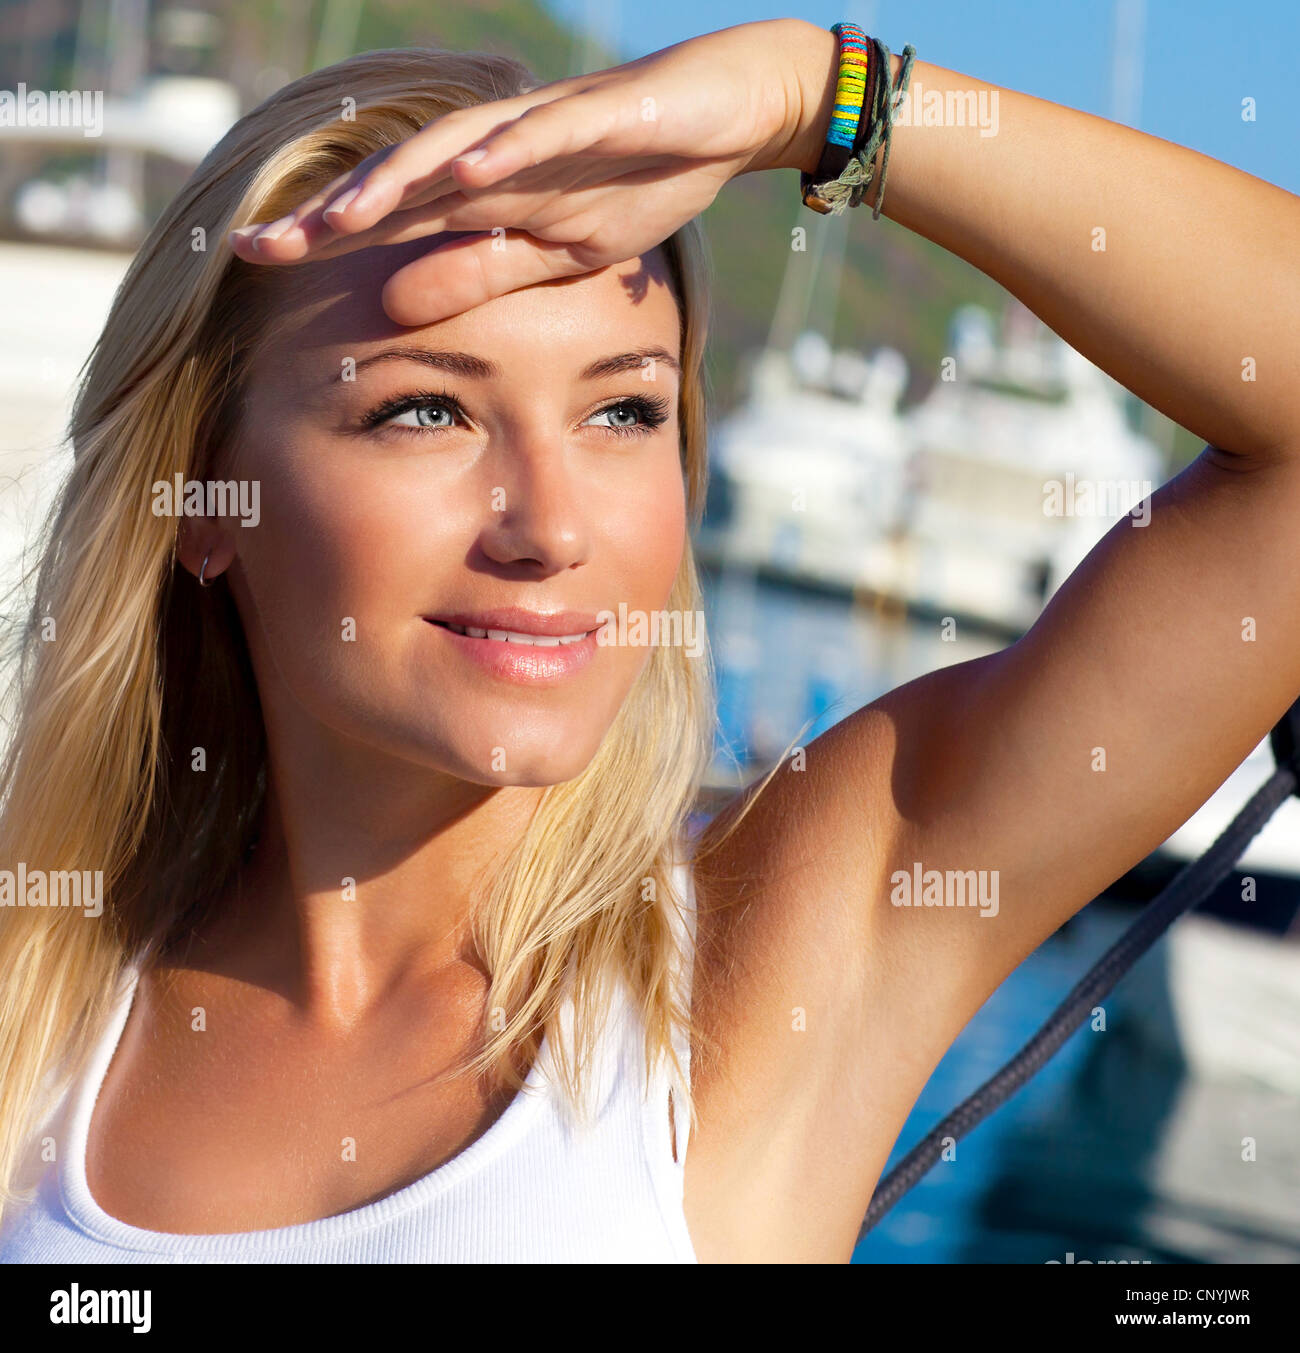 Close Up Portrait On Happy Smiling Female Face Summer Cruise Holidays European Girl Tourist